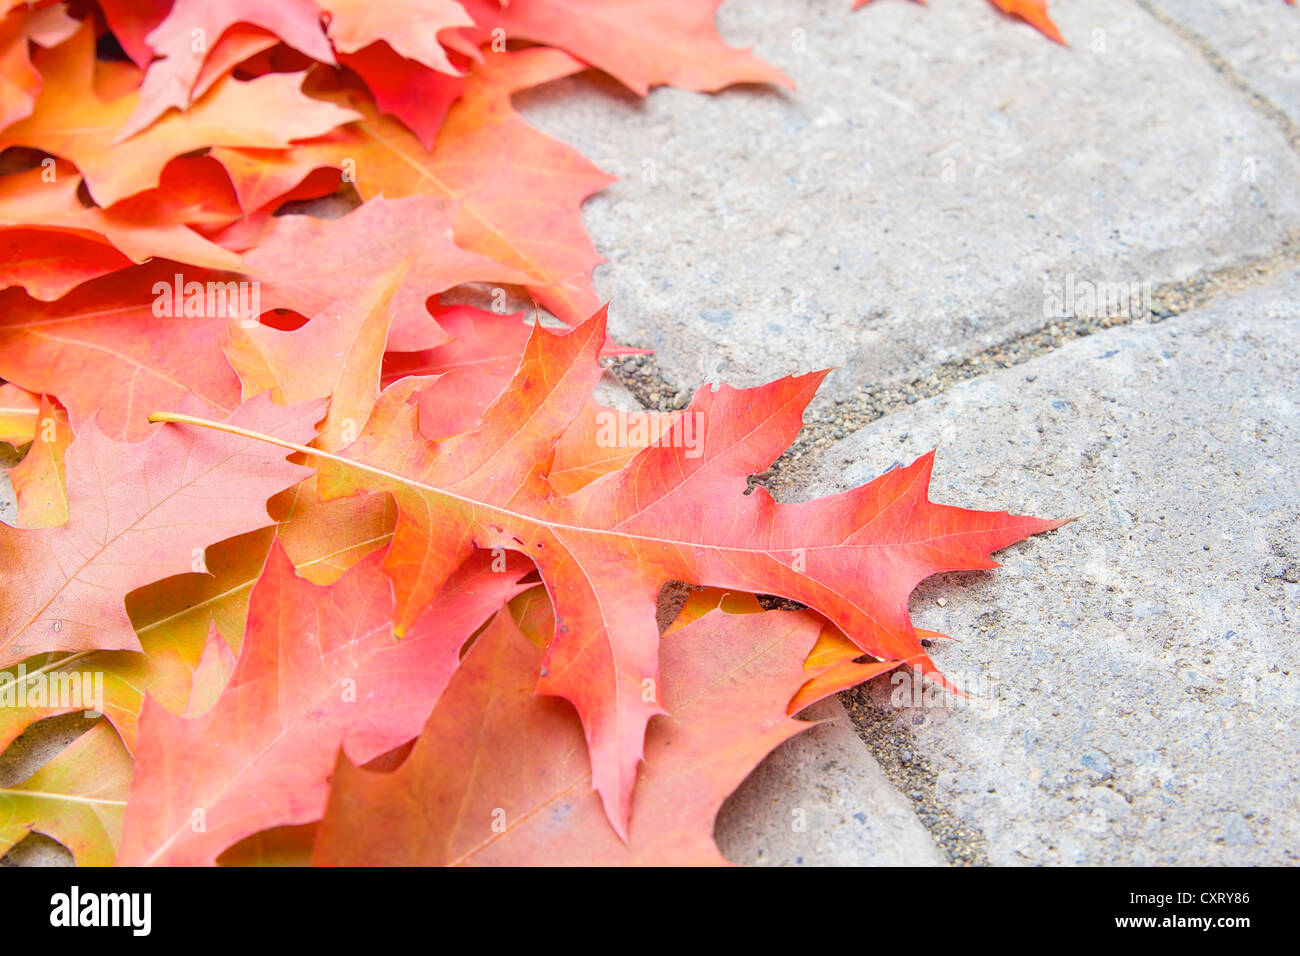 Colorful Oak Tree Leaves Fallen on Backyard Paver Patio in Autumn Season Closeup Stock Photo